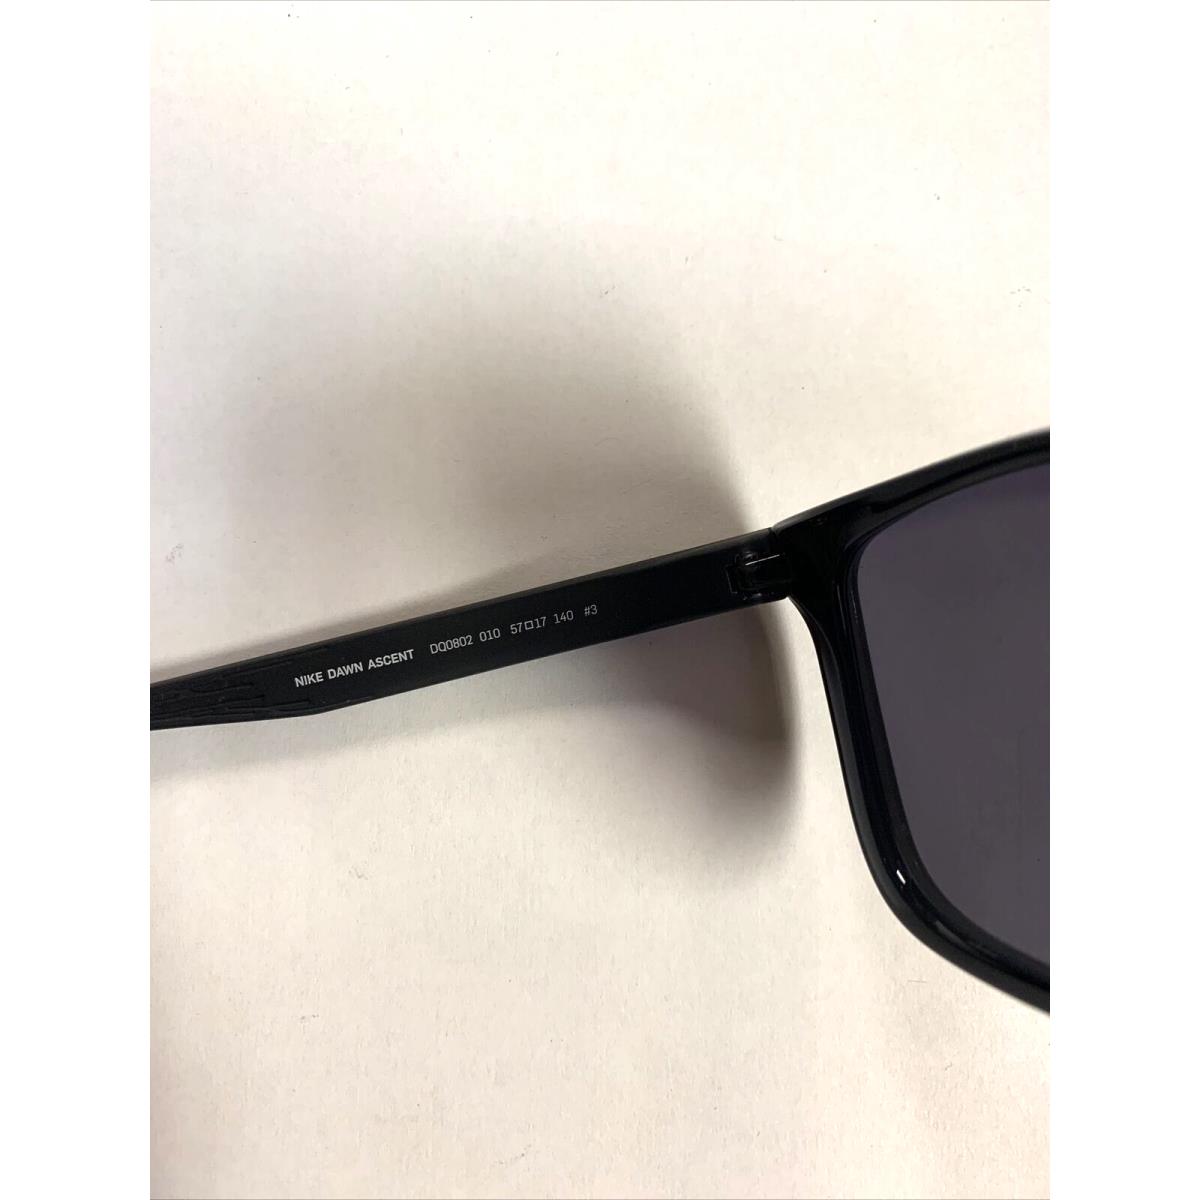 Nike sunglasses Dawn Ascent - Black Frame, Gray Lens, 010 Black/Dark Grey Code 3